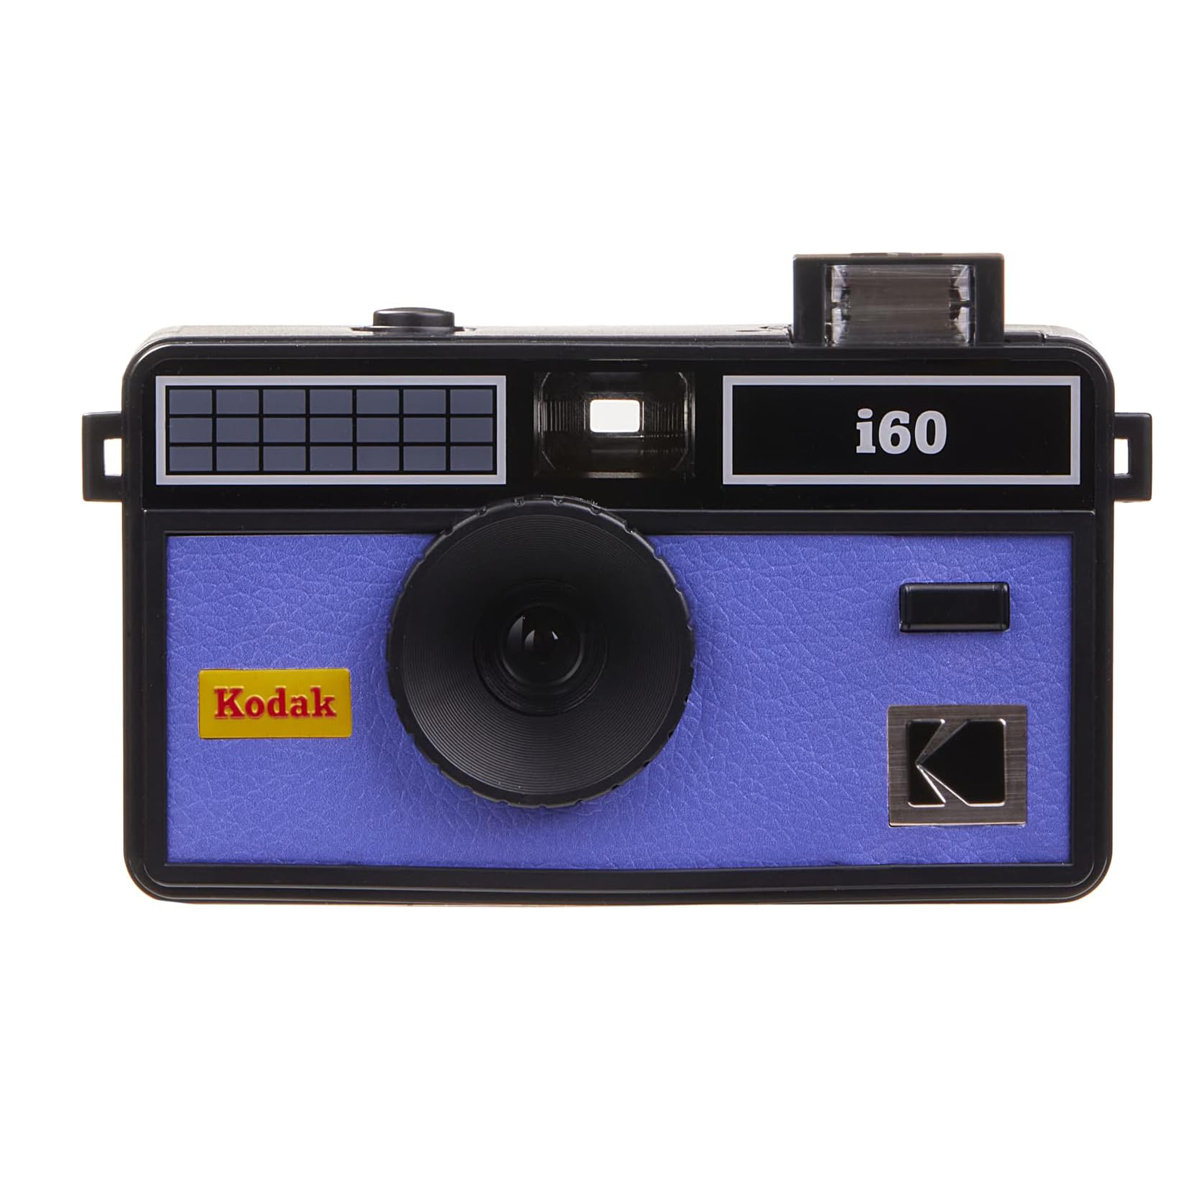 Kodak i60 Reusable 35mm Film Camera – Retro Style, Focus Free, Built in Flash, Press and Pop-up Flash (Very Peri)